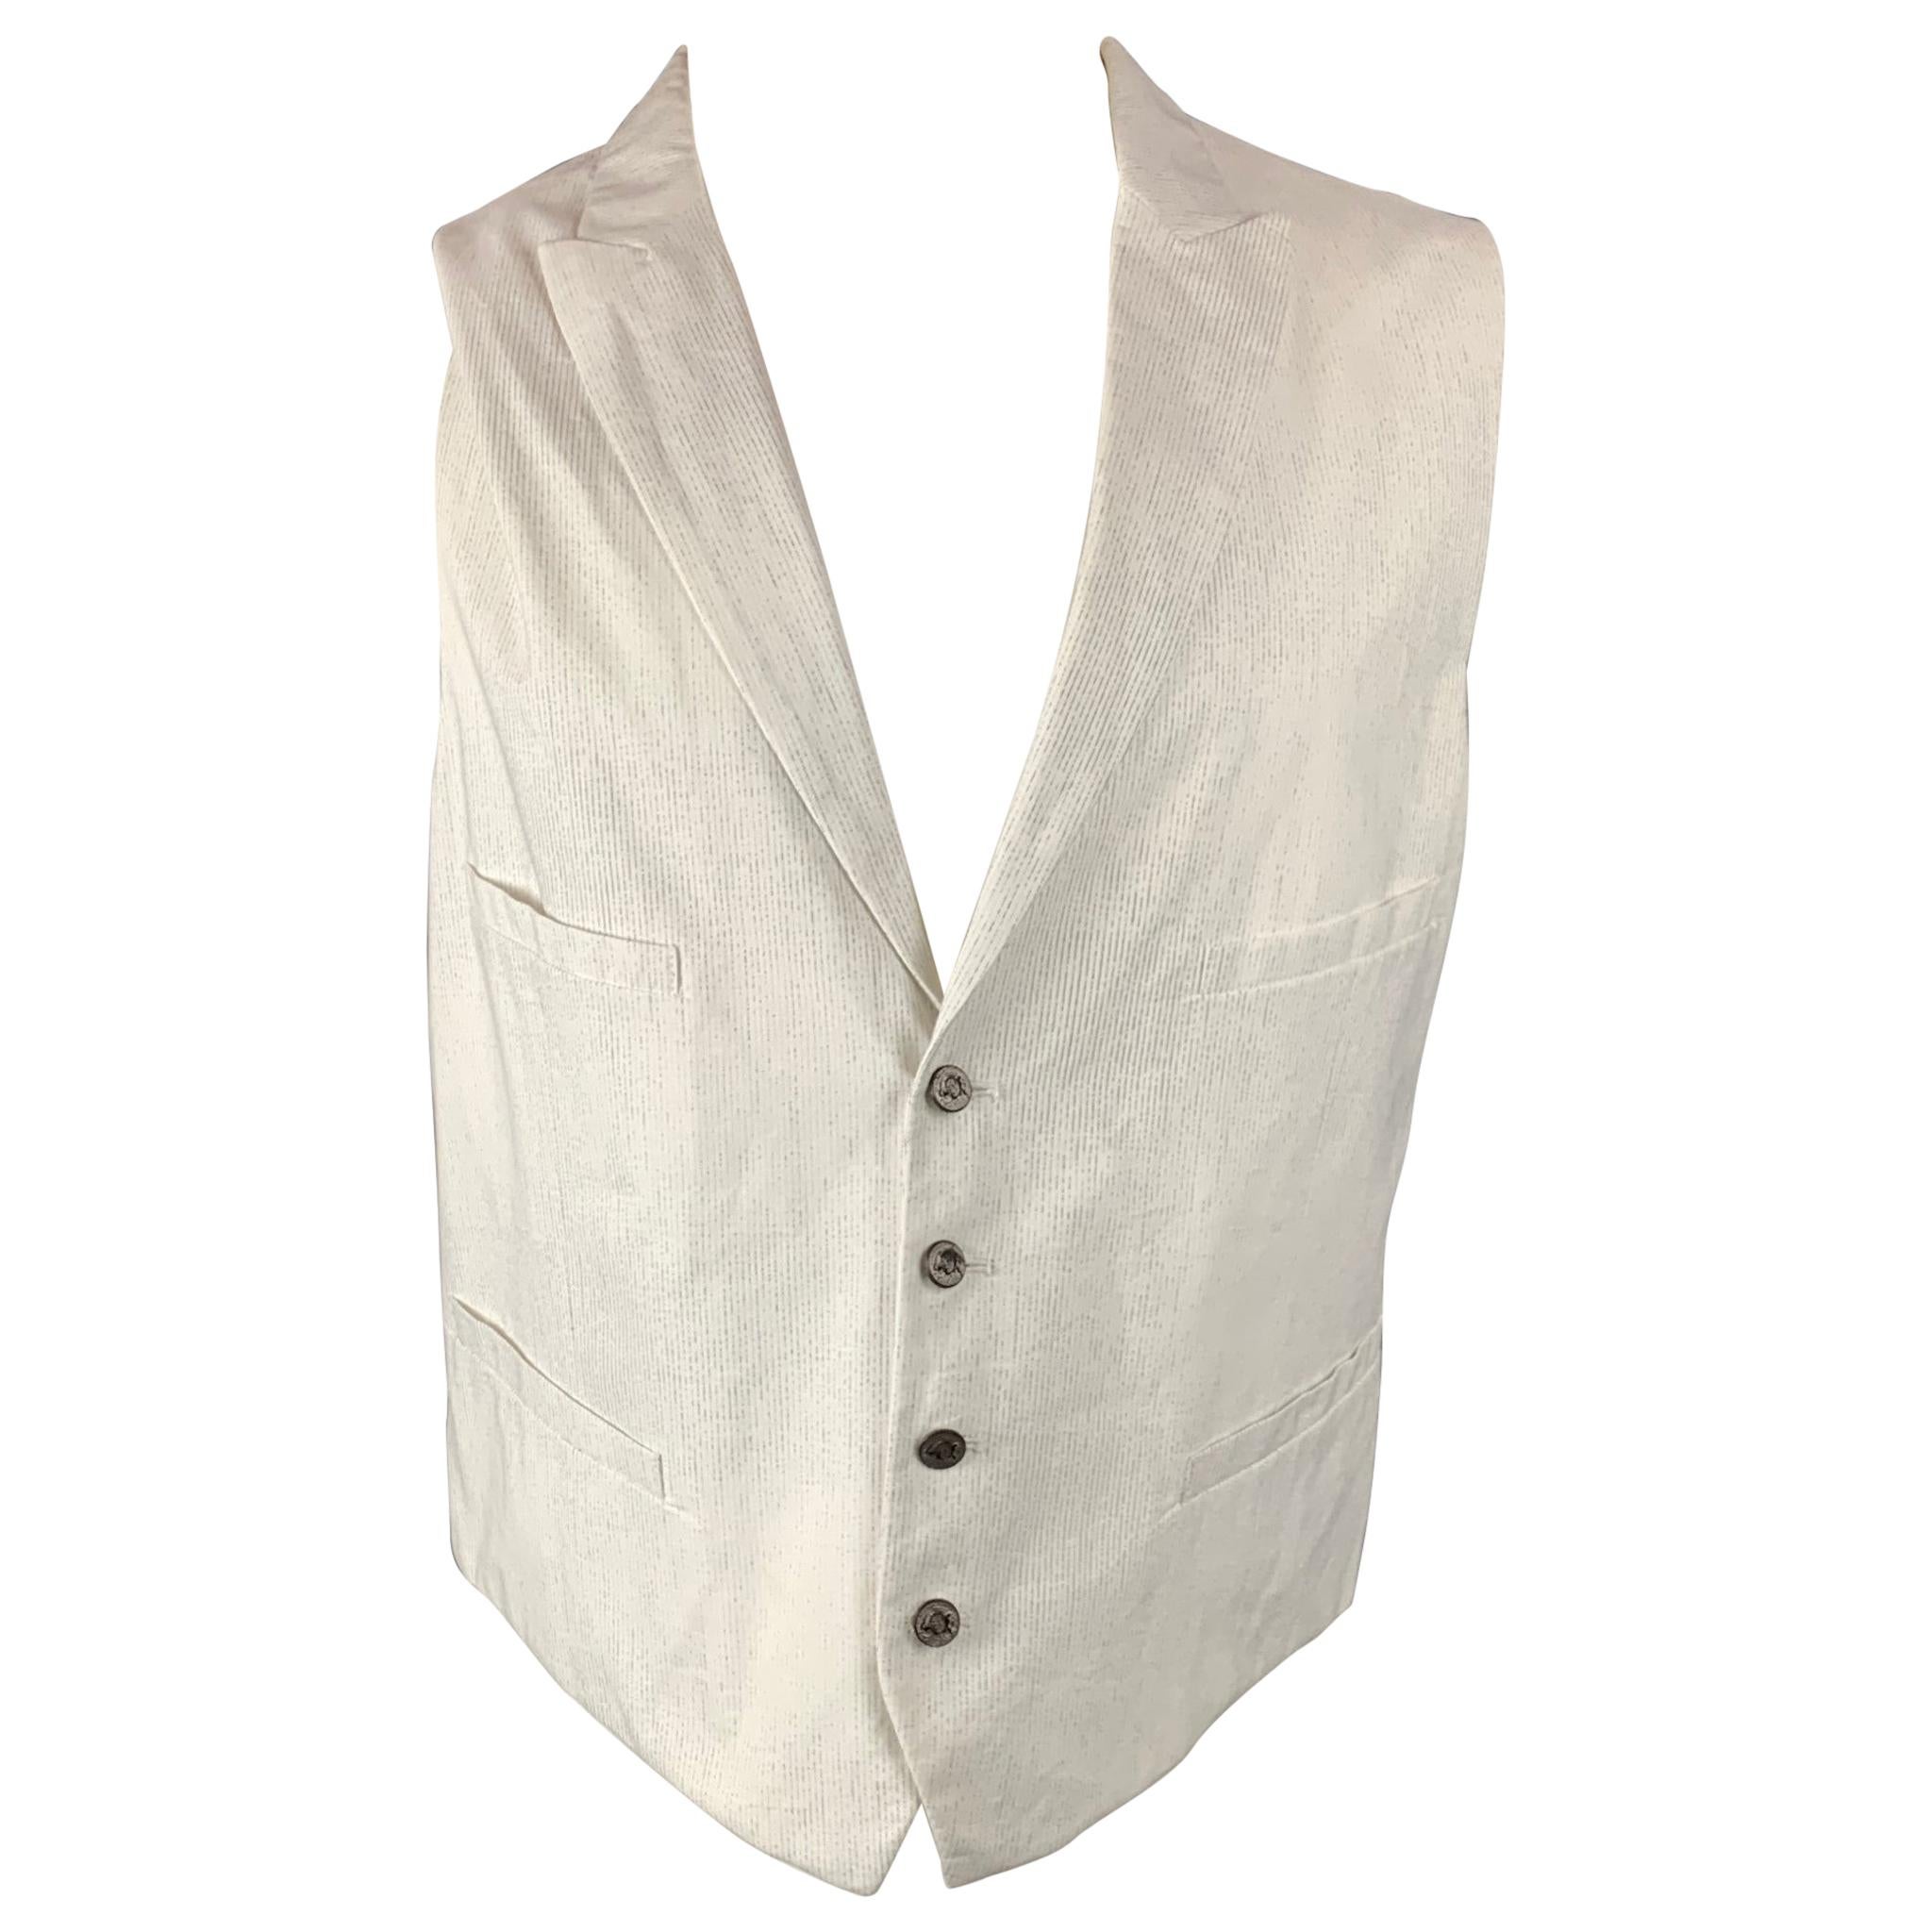 JOHN VARVATOS Size 44 White & Grey Pinstripe Cotton Buttoned Vest